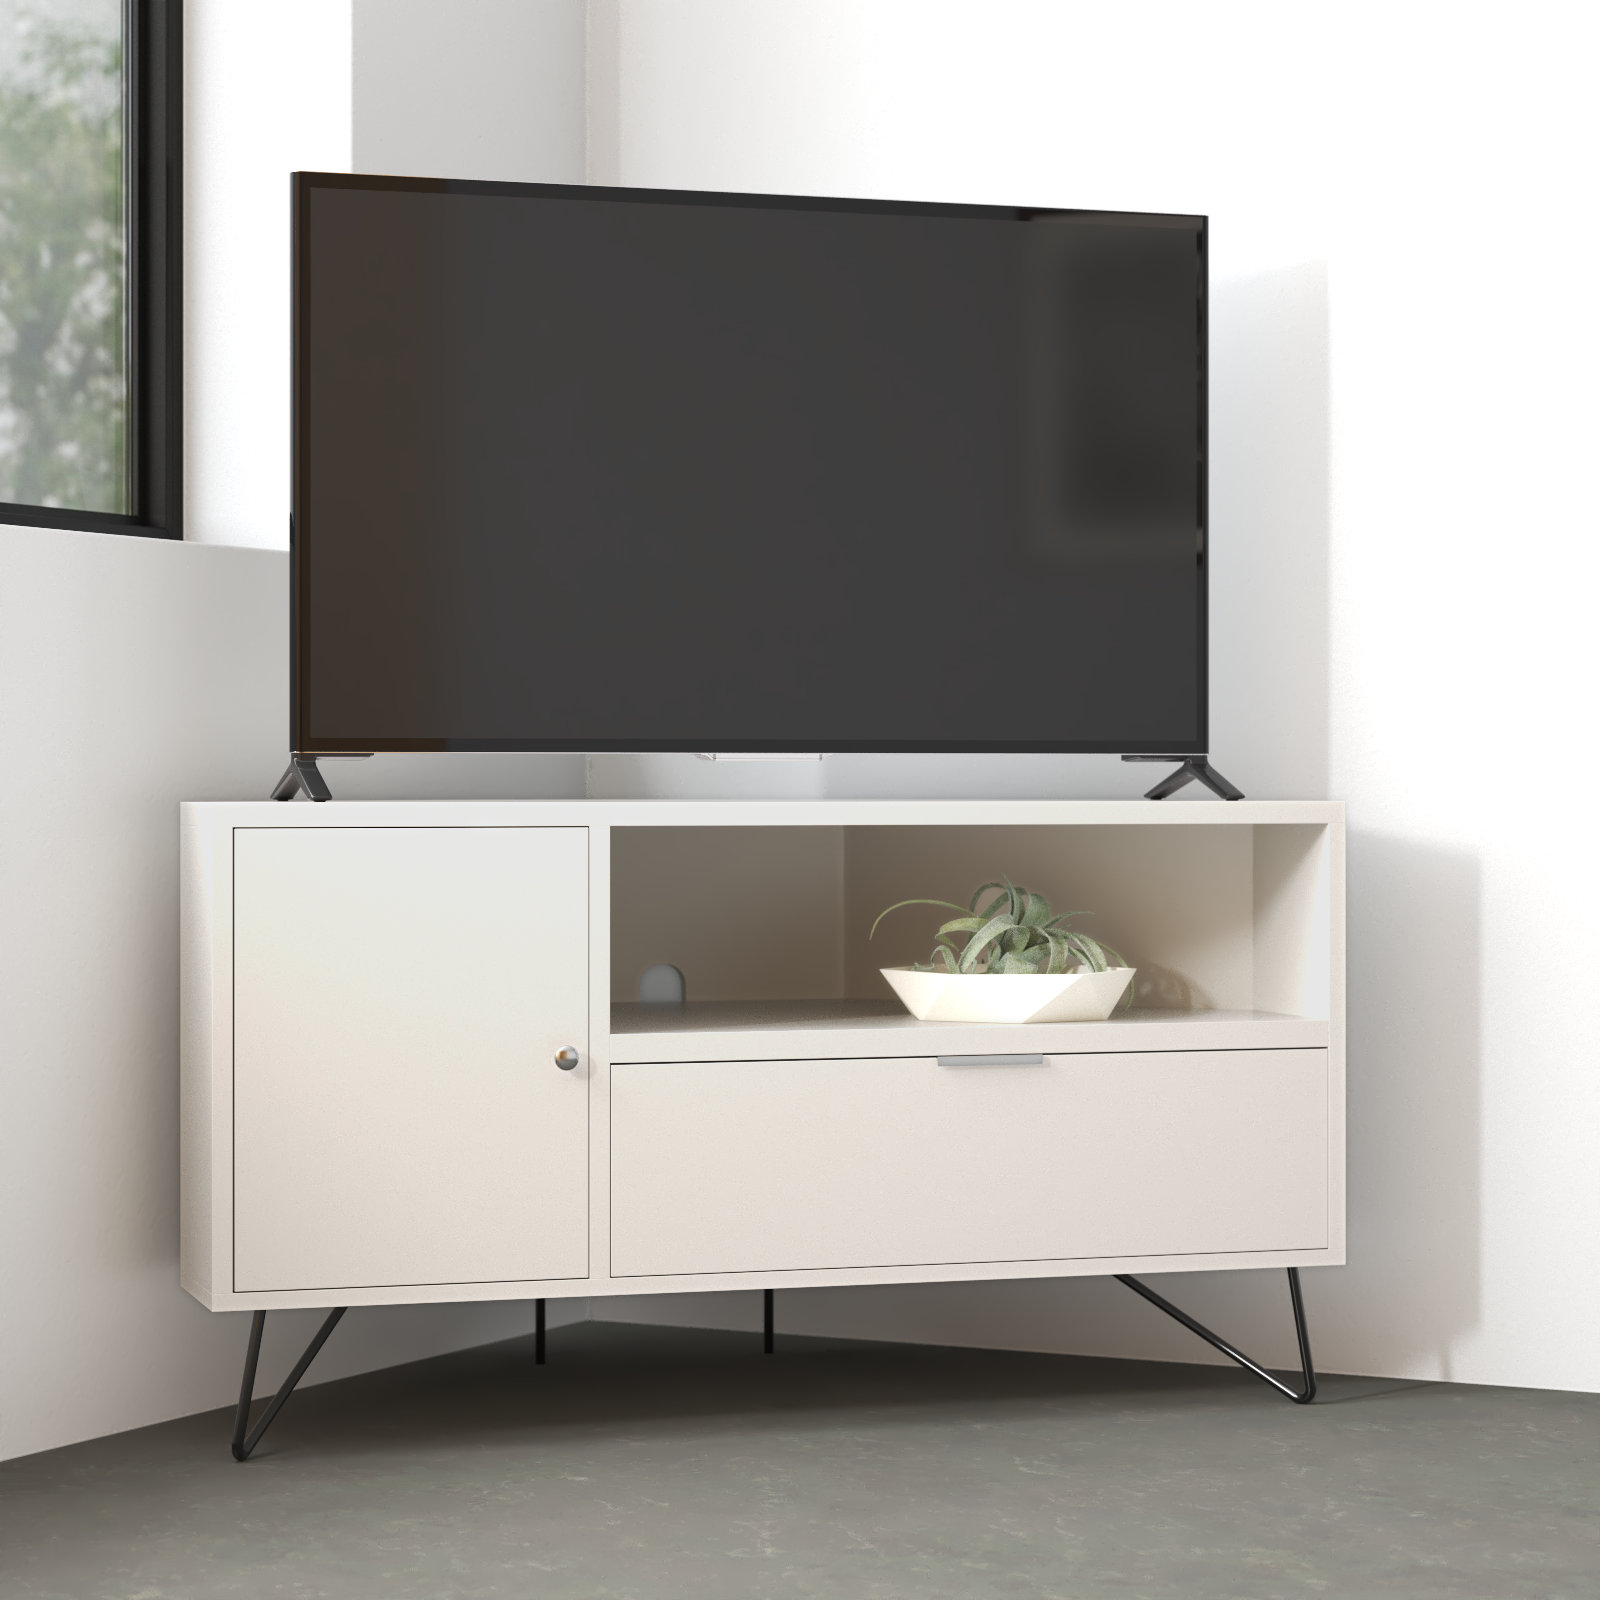 Meuble TV d'angle BLU-RAY - design - VAZARD home